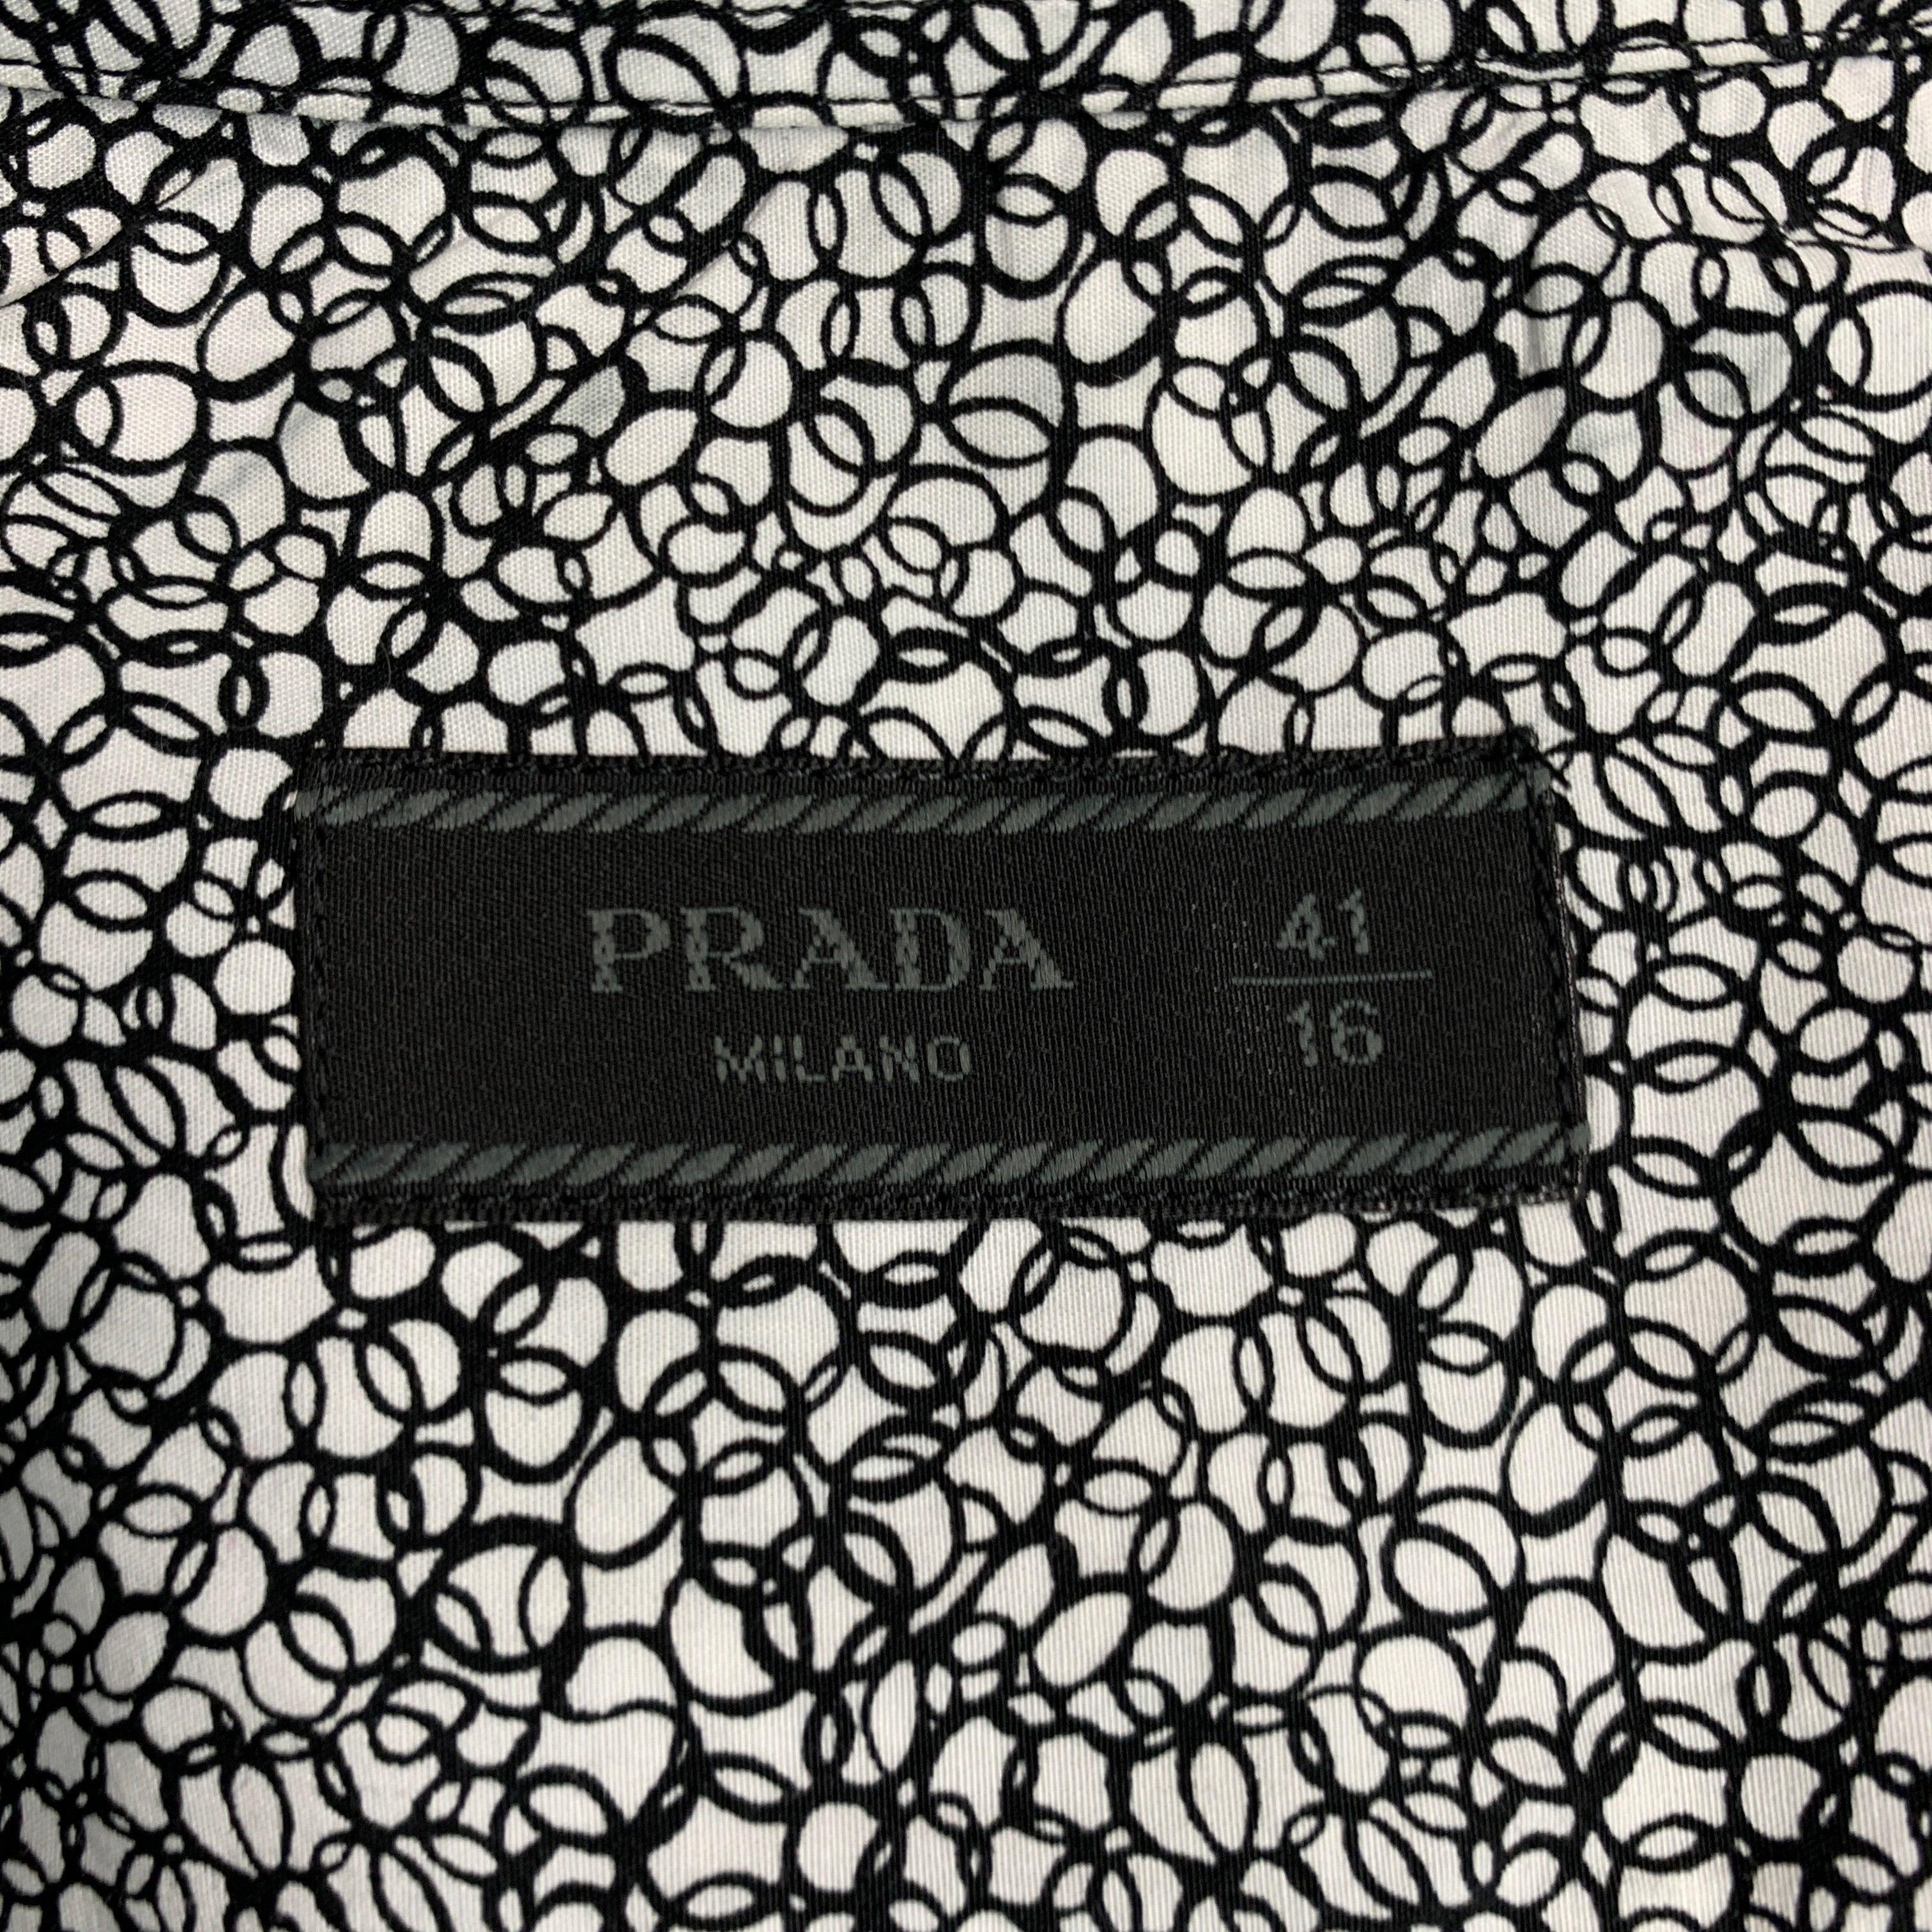 PRADA Size M Black White Print Cotton Button Up Short Sleeve Shirt 1